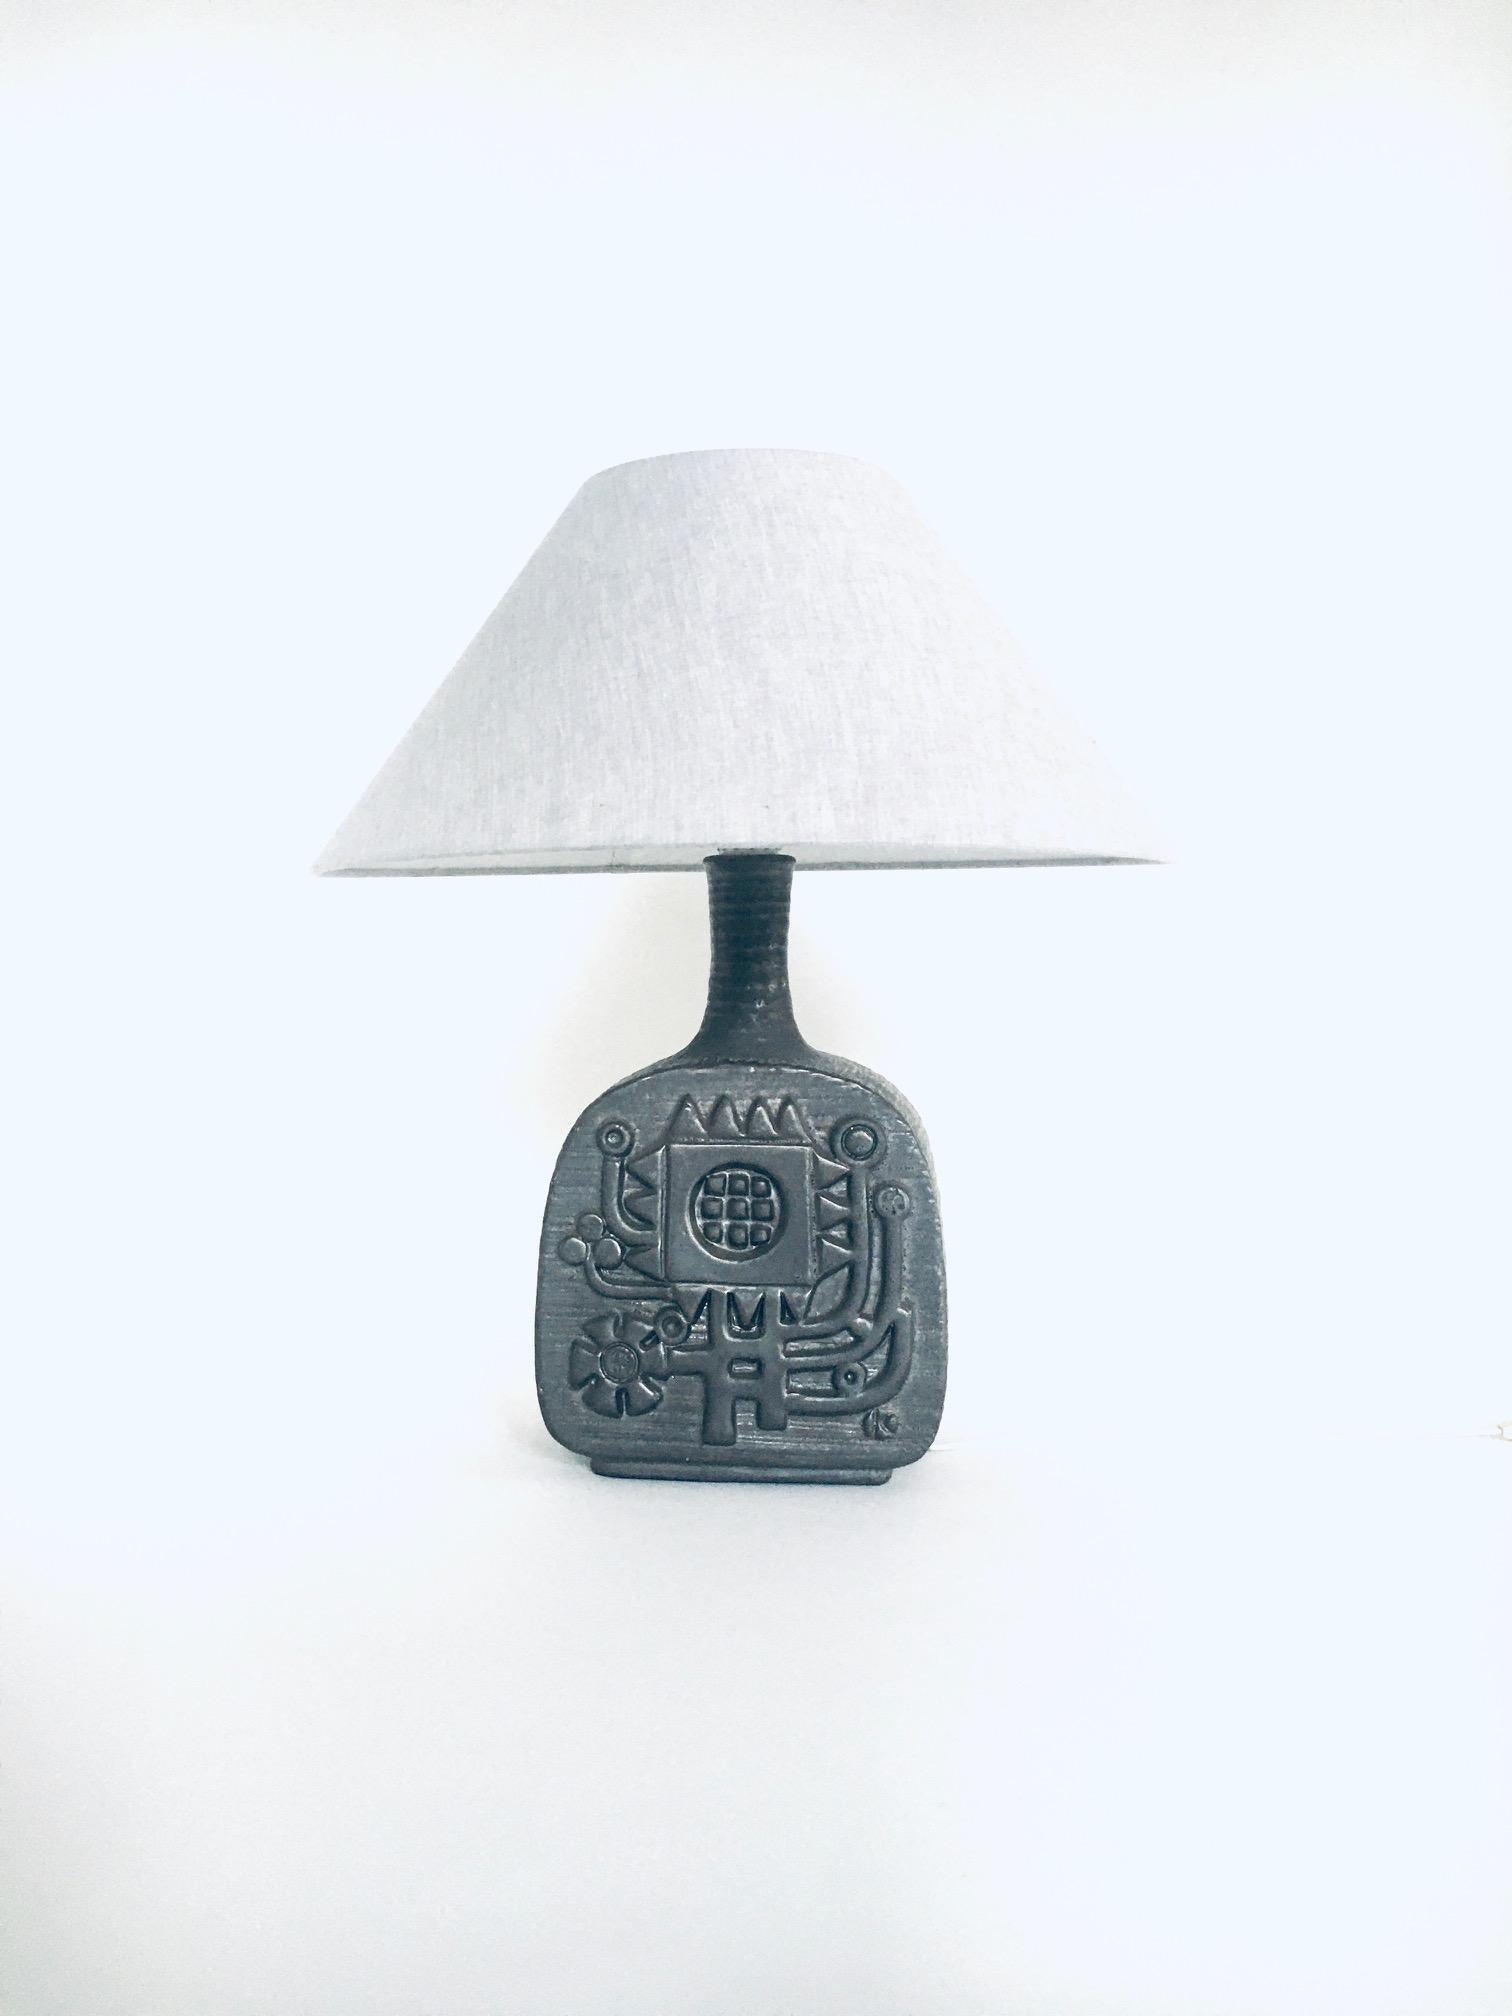 Vintage mid-century Brutalist design ceramic table lamp by Emiel Laskaris, made in the Amphora / Perignem Studios, Belgium 1960's. Emiel Laskaris worked primarily at the Perignem / Amphora studios in the period when this lamp was designed and made.